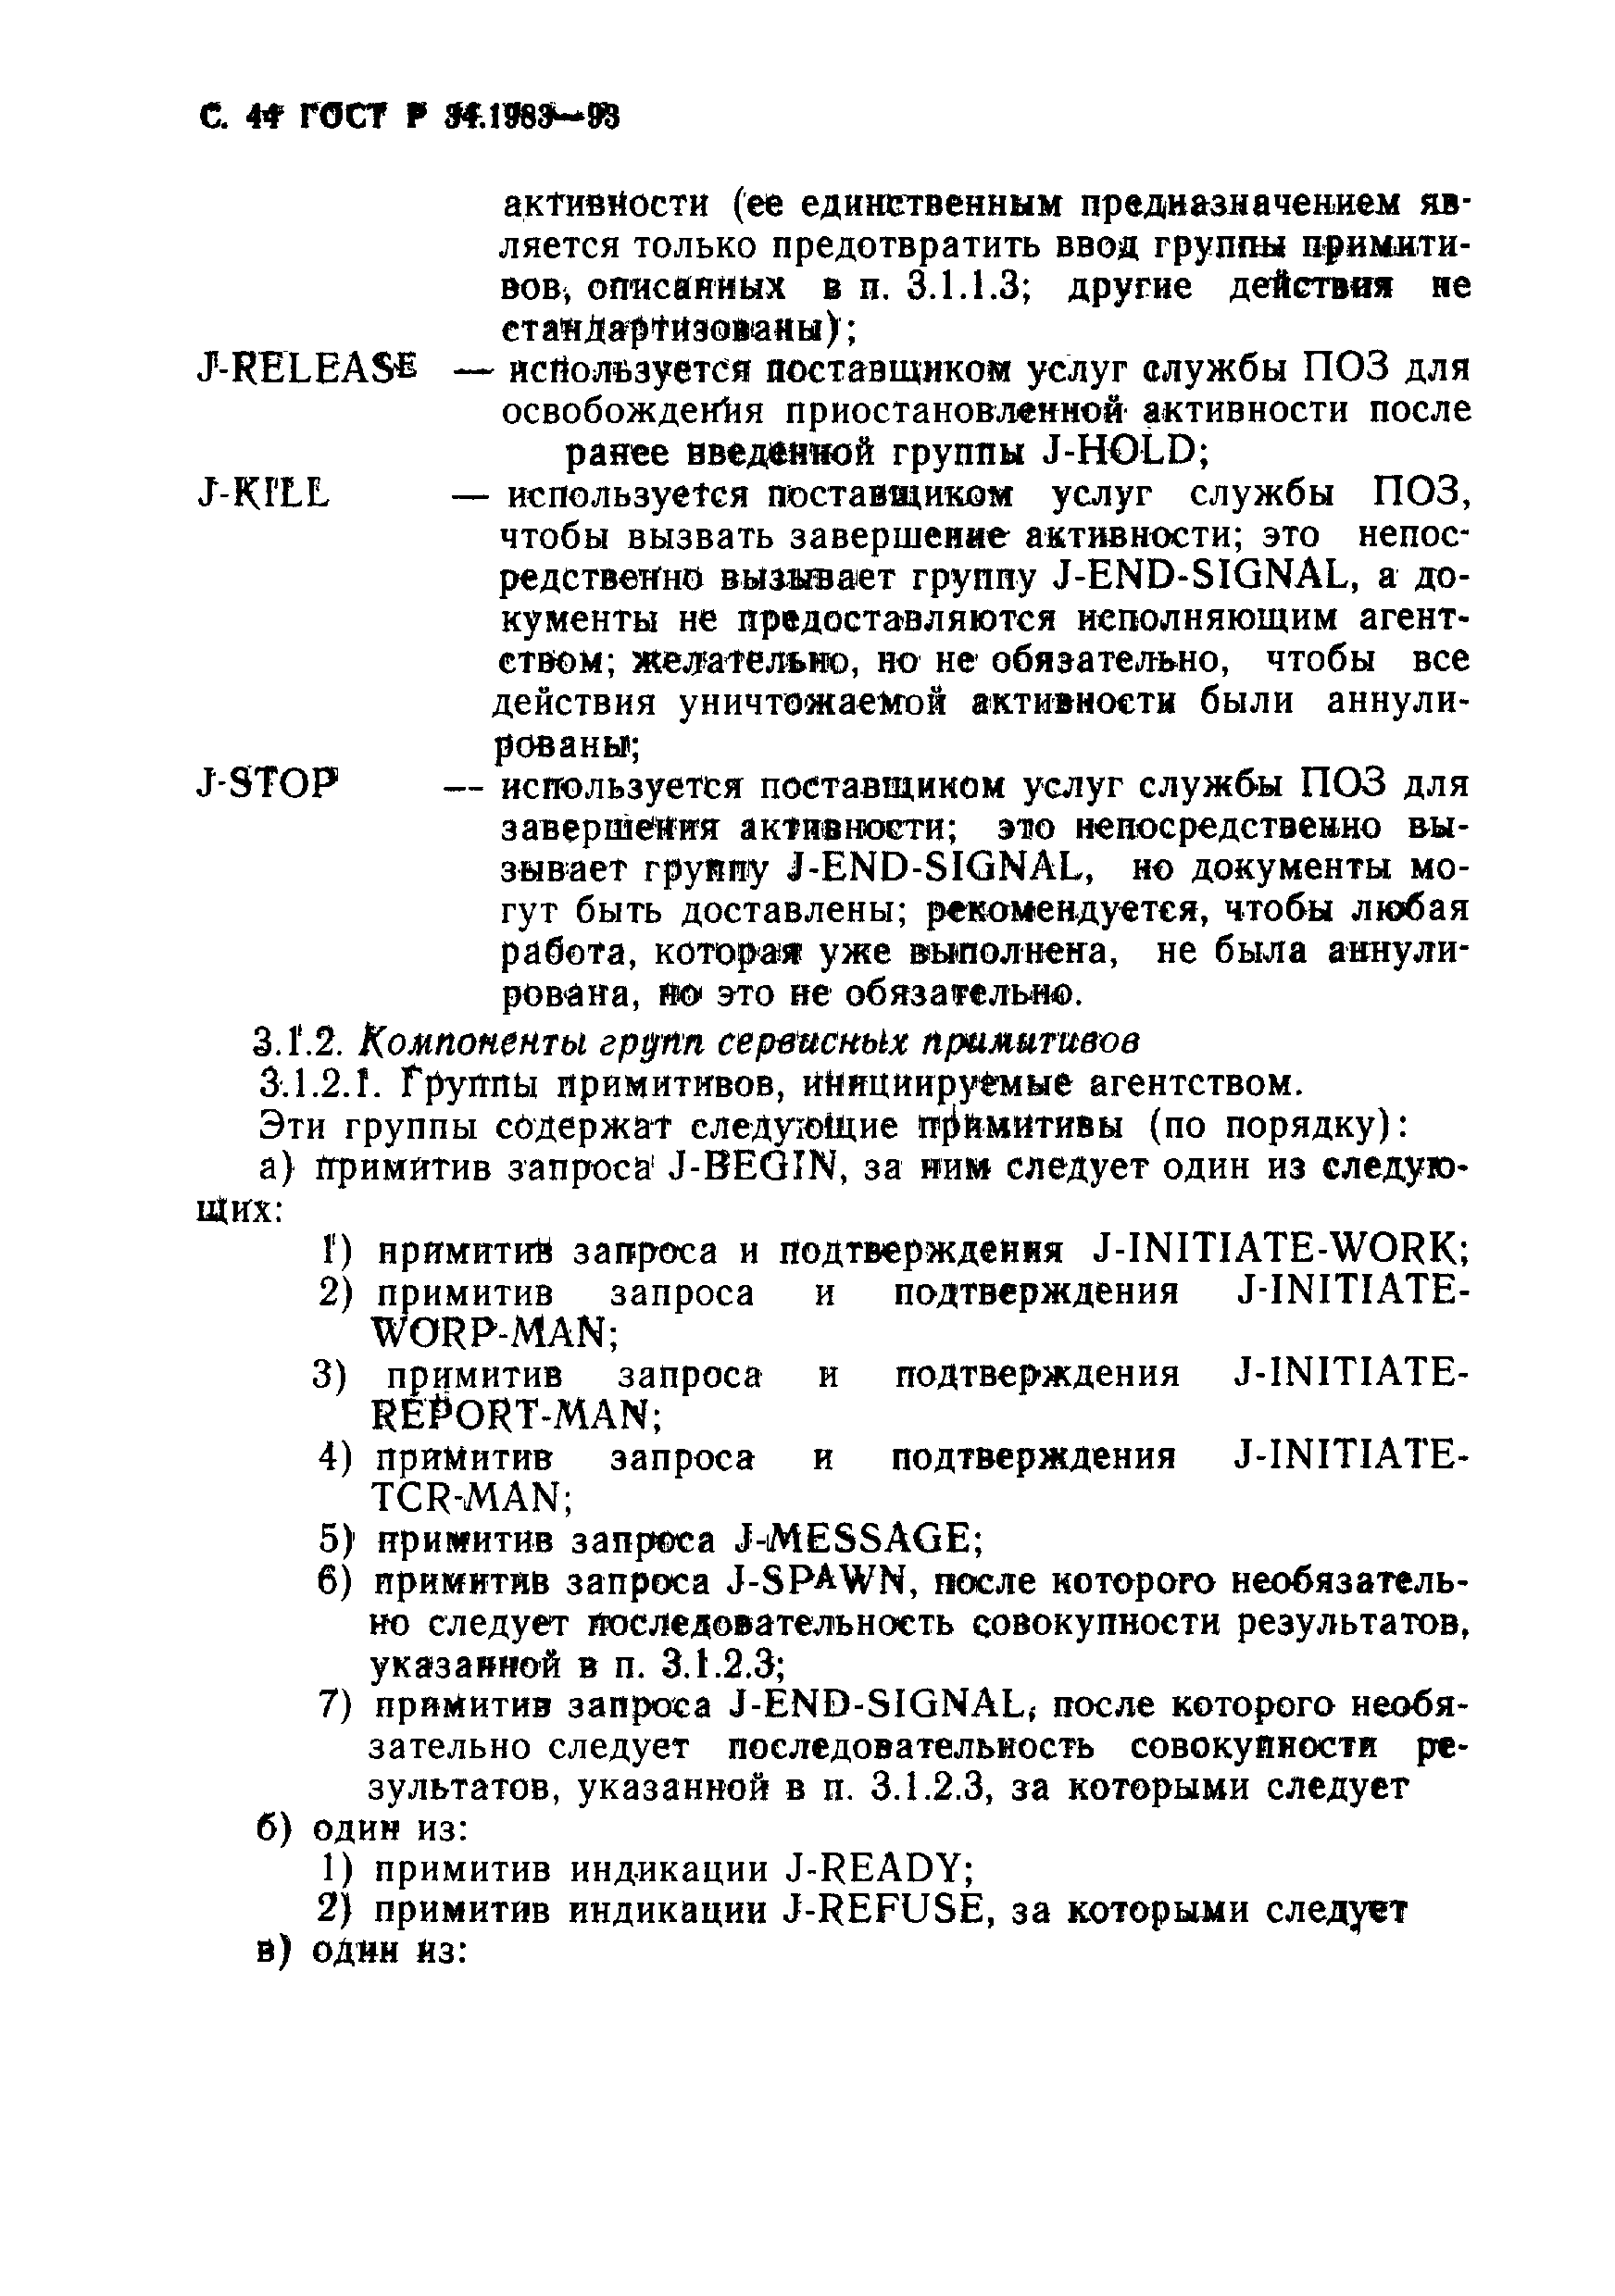 ГОСТ Р 34.1983-93. Страница 45